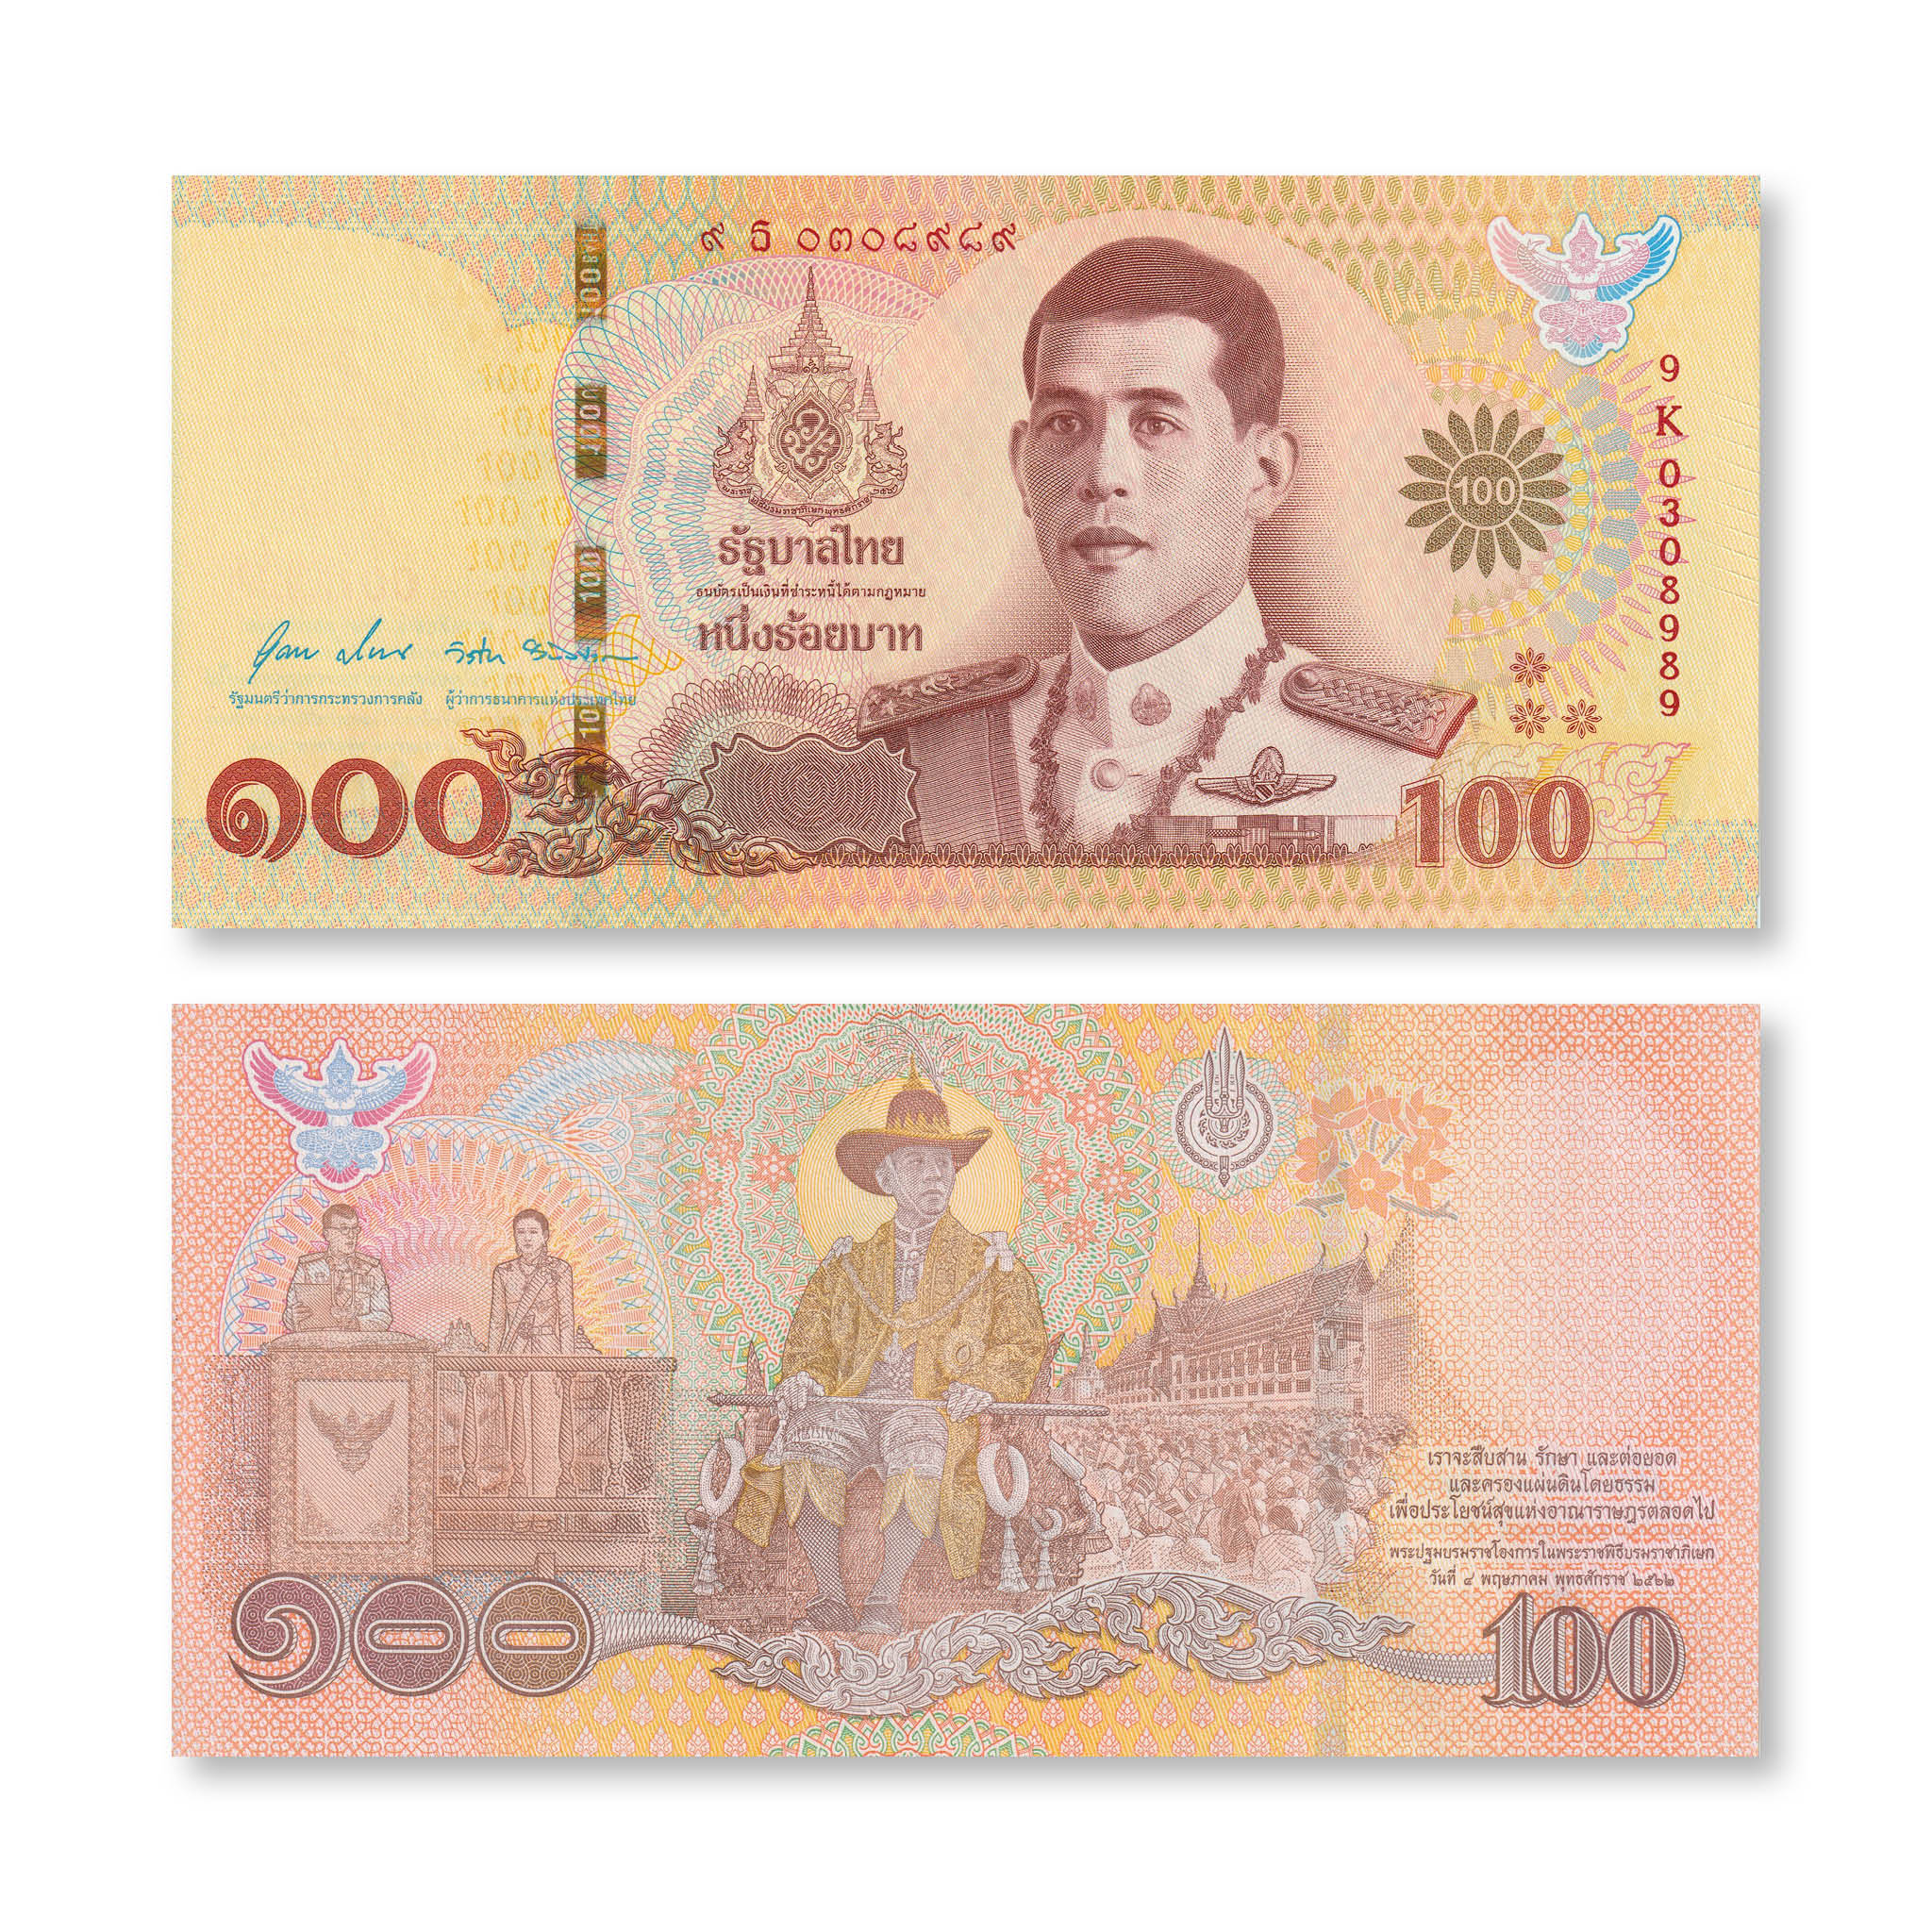 Thailand 100 Baht, 2020, B198a, UNC - Robert's World Money - World Banknotes